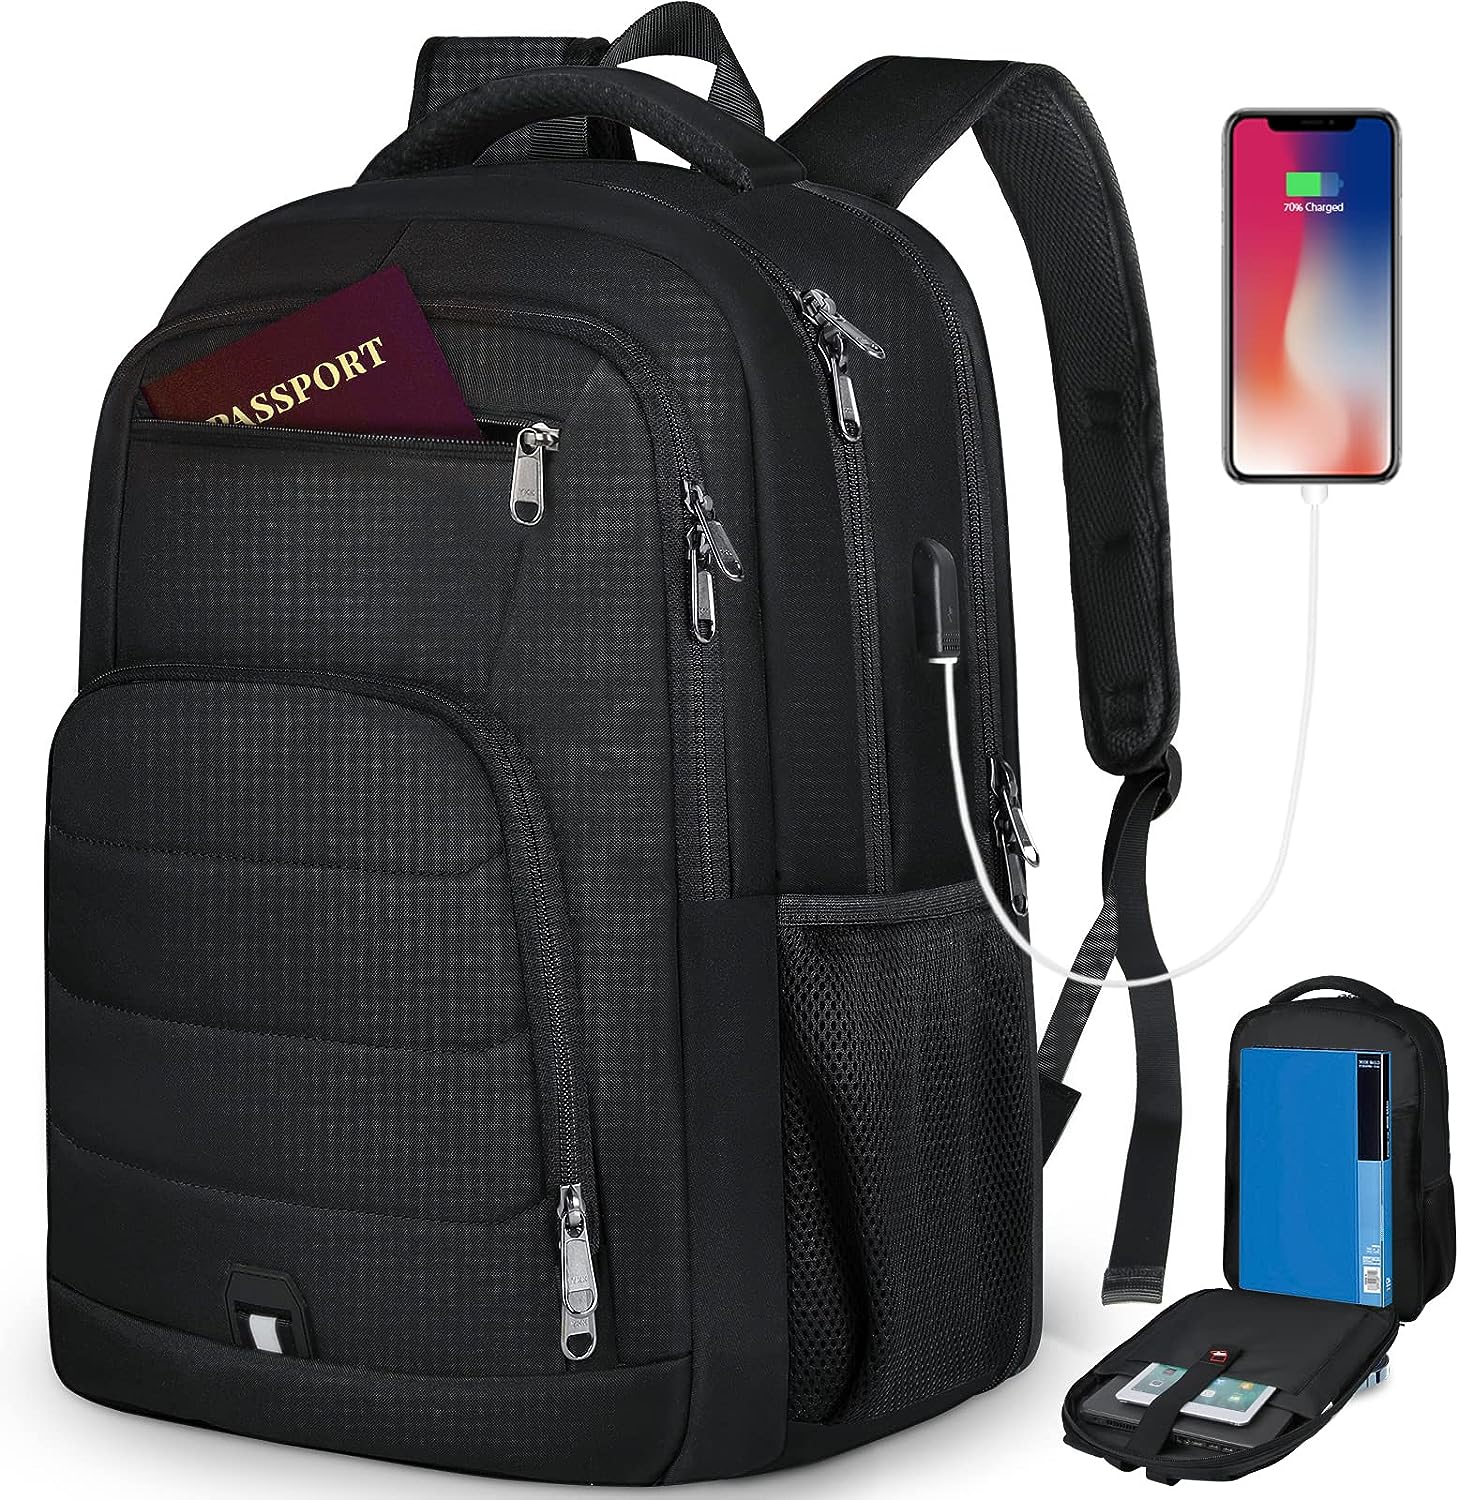 RAINSMORE Laptop Backpack 17 Inch Large Travel [...]